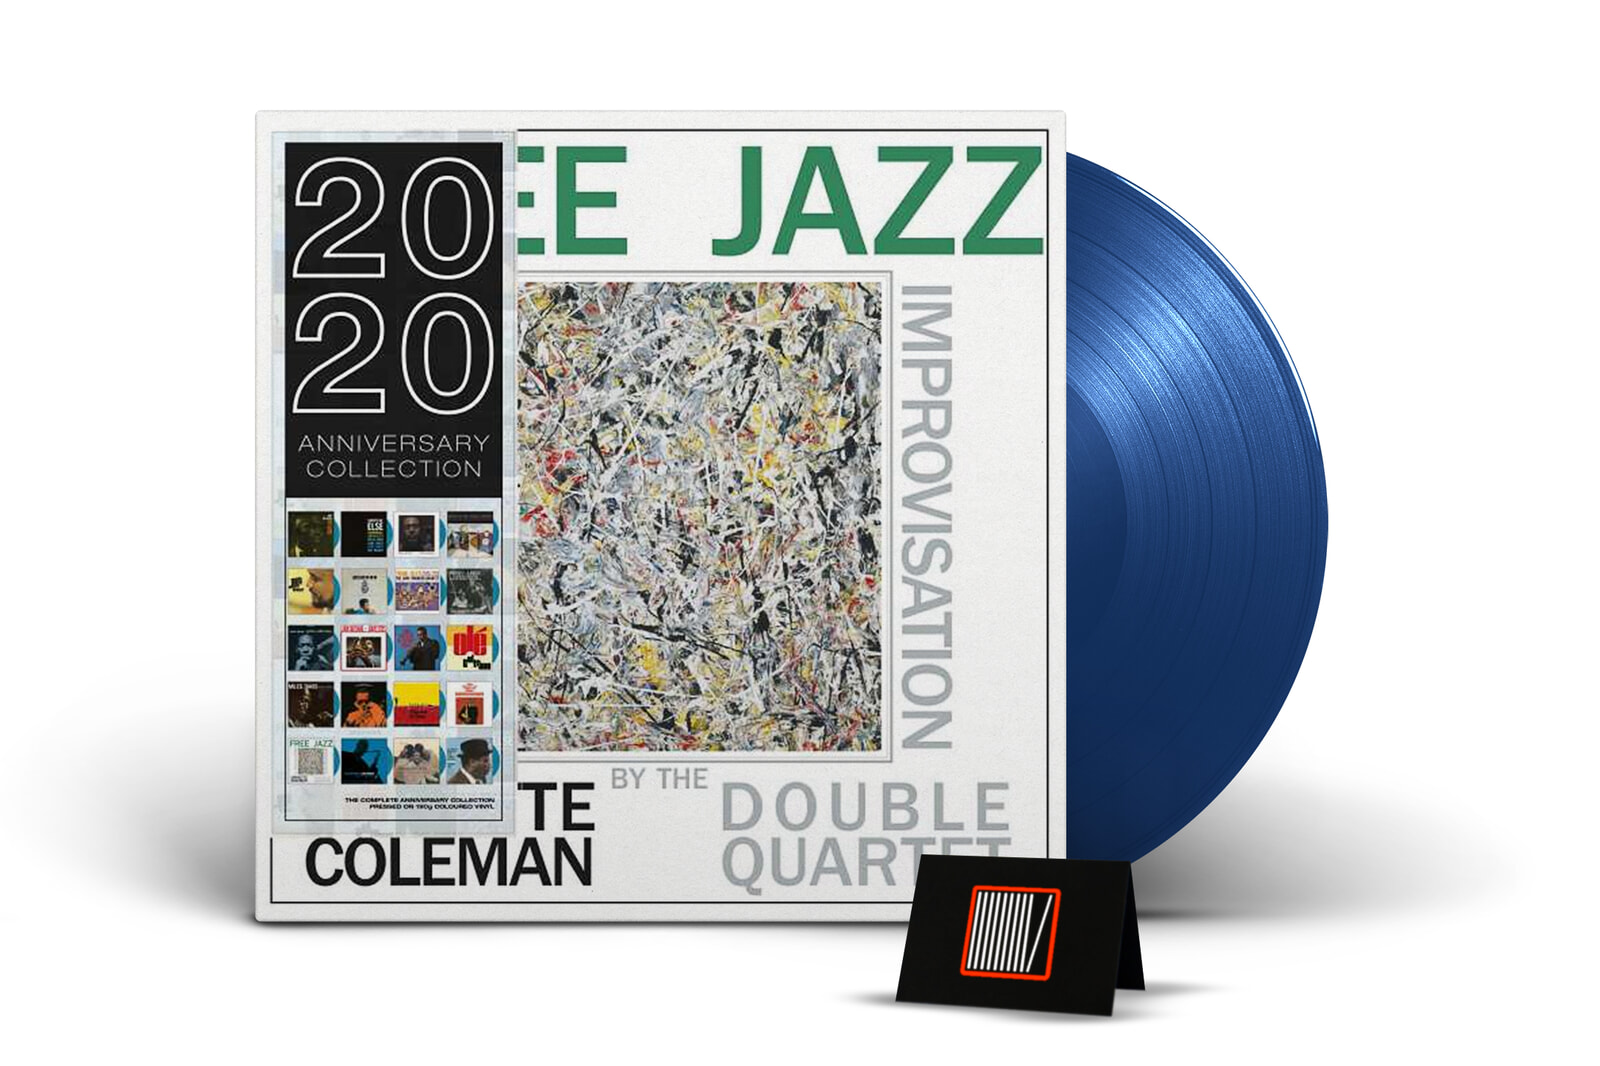 Ornette Coleman Double Quartet (오넷 콜맨 더블 쿼텟) - Free Jazz [블루 컬러 LP]